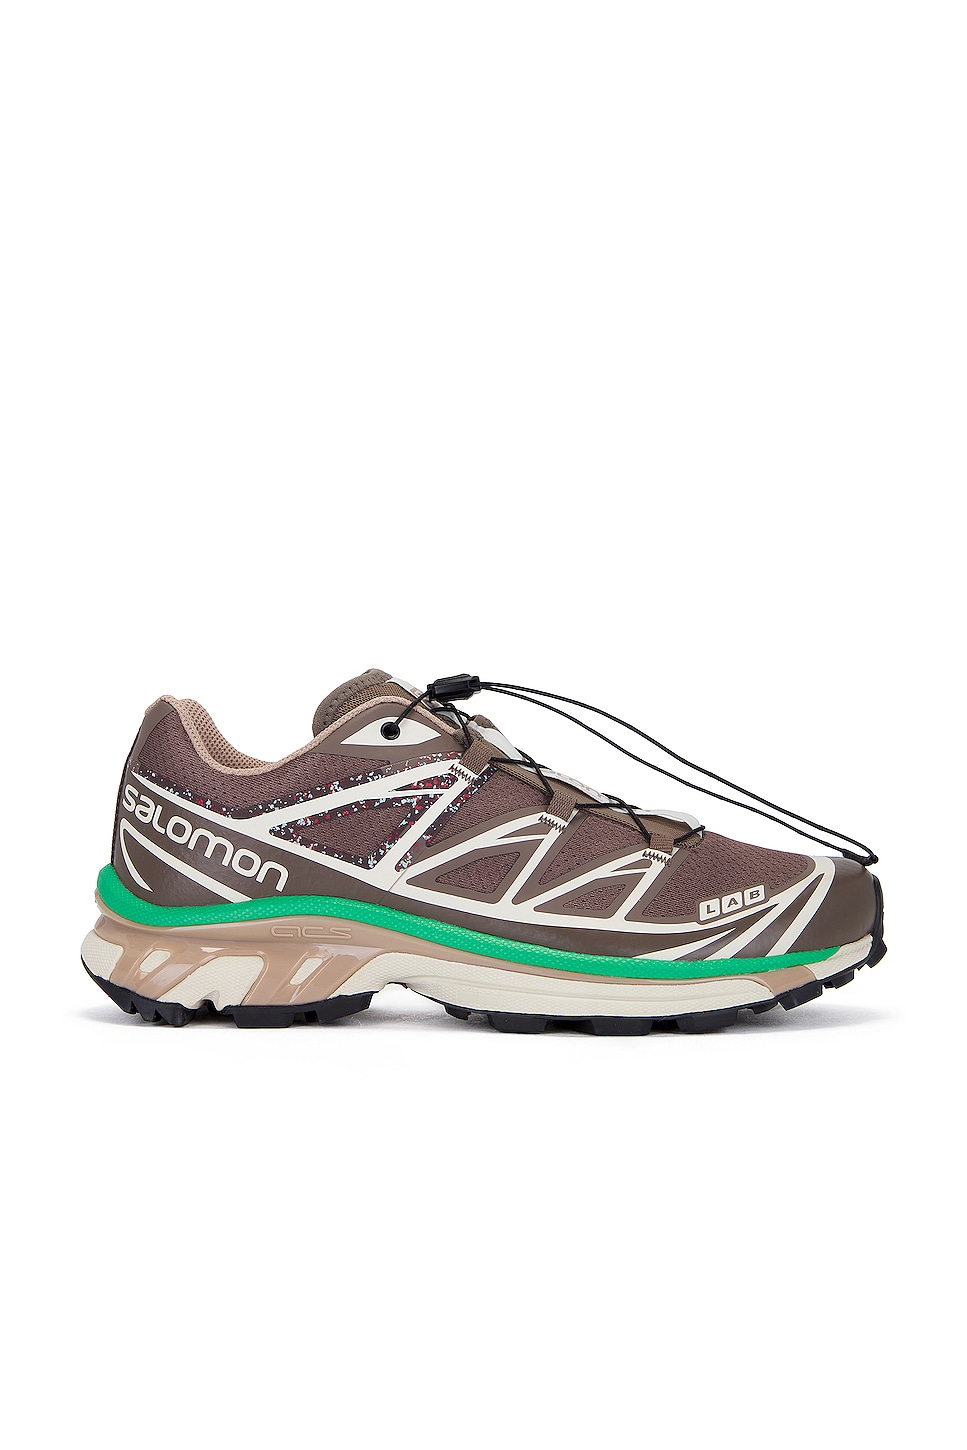 Image 1 of Salomon Xt-6 Mindful 2 Sneaker in Falcon, Almond Milk, & Bright Green